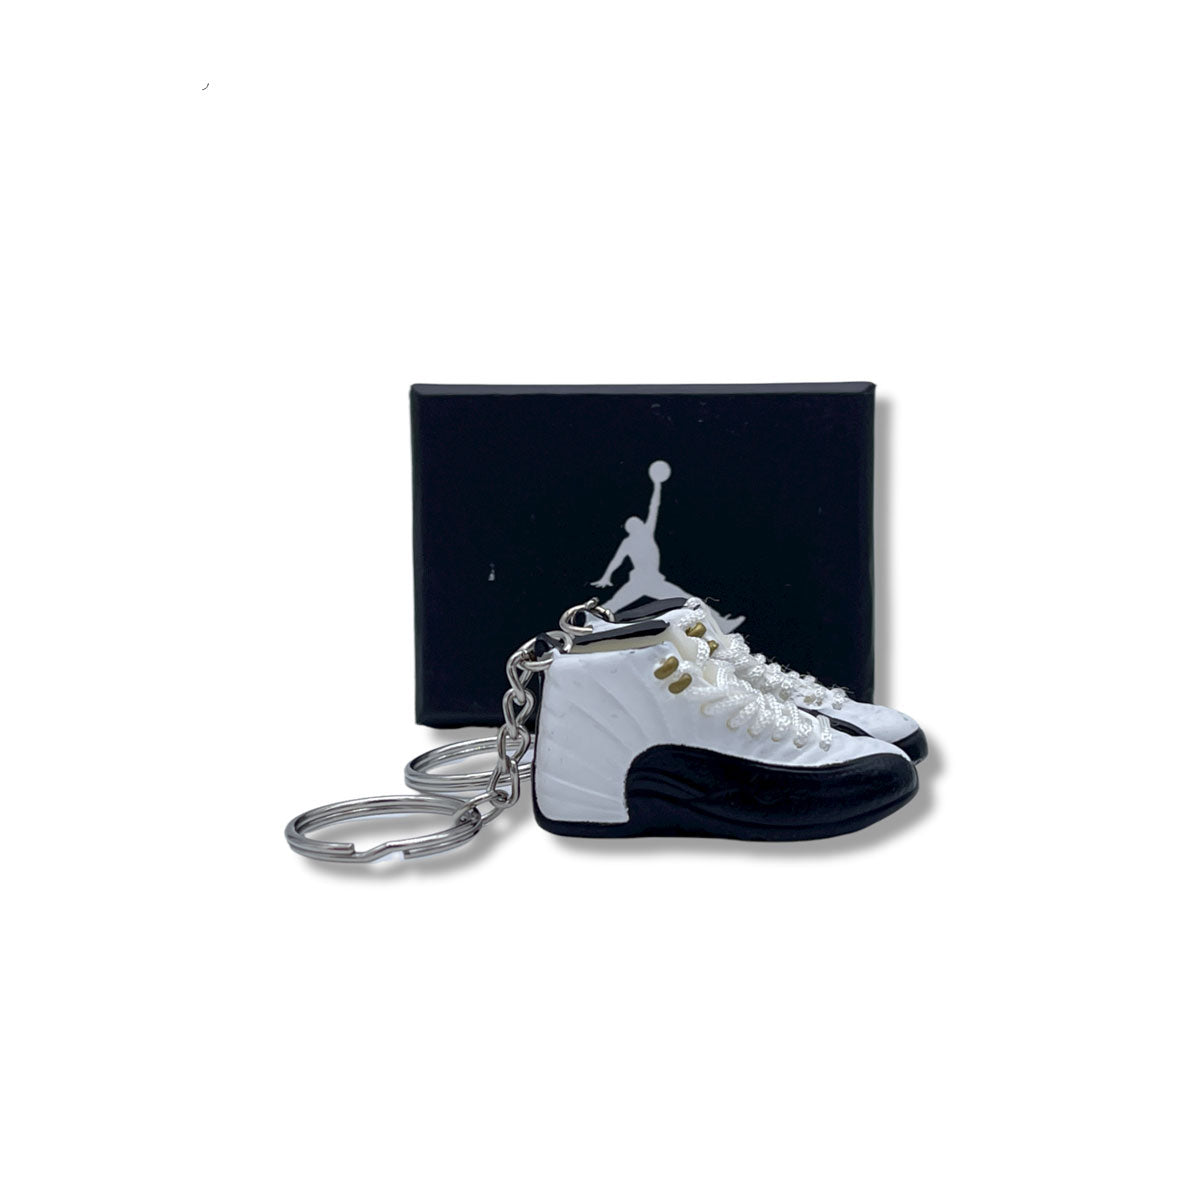 3D Sneaker Keychain - Air Jordan 12 Taxi Pair